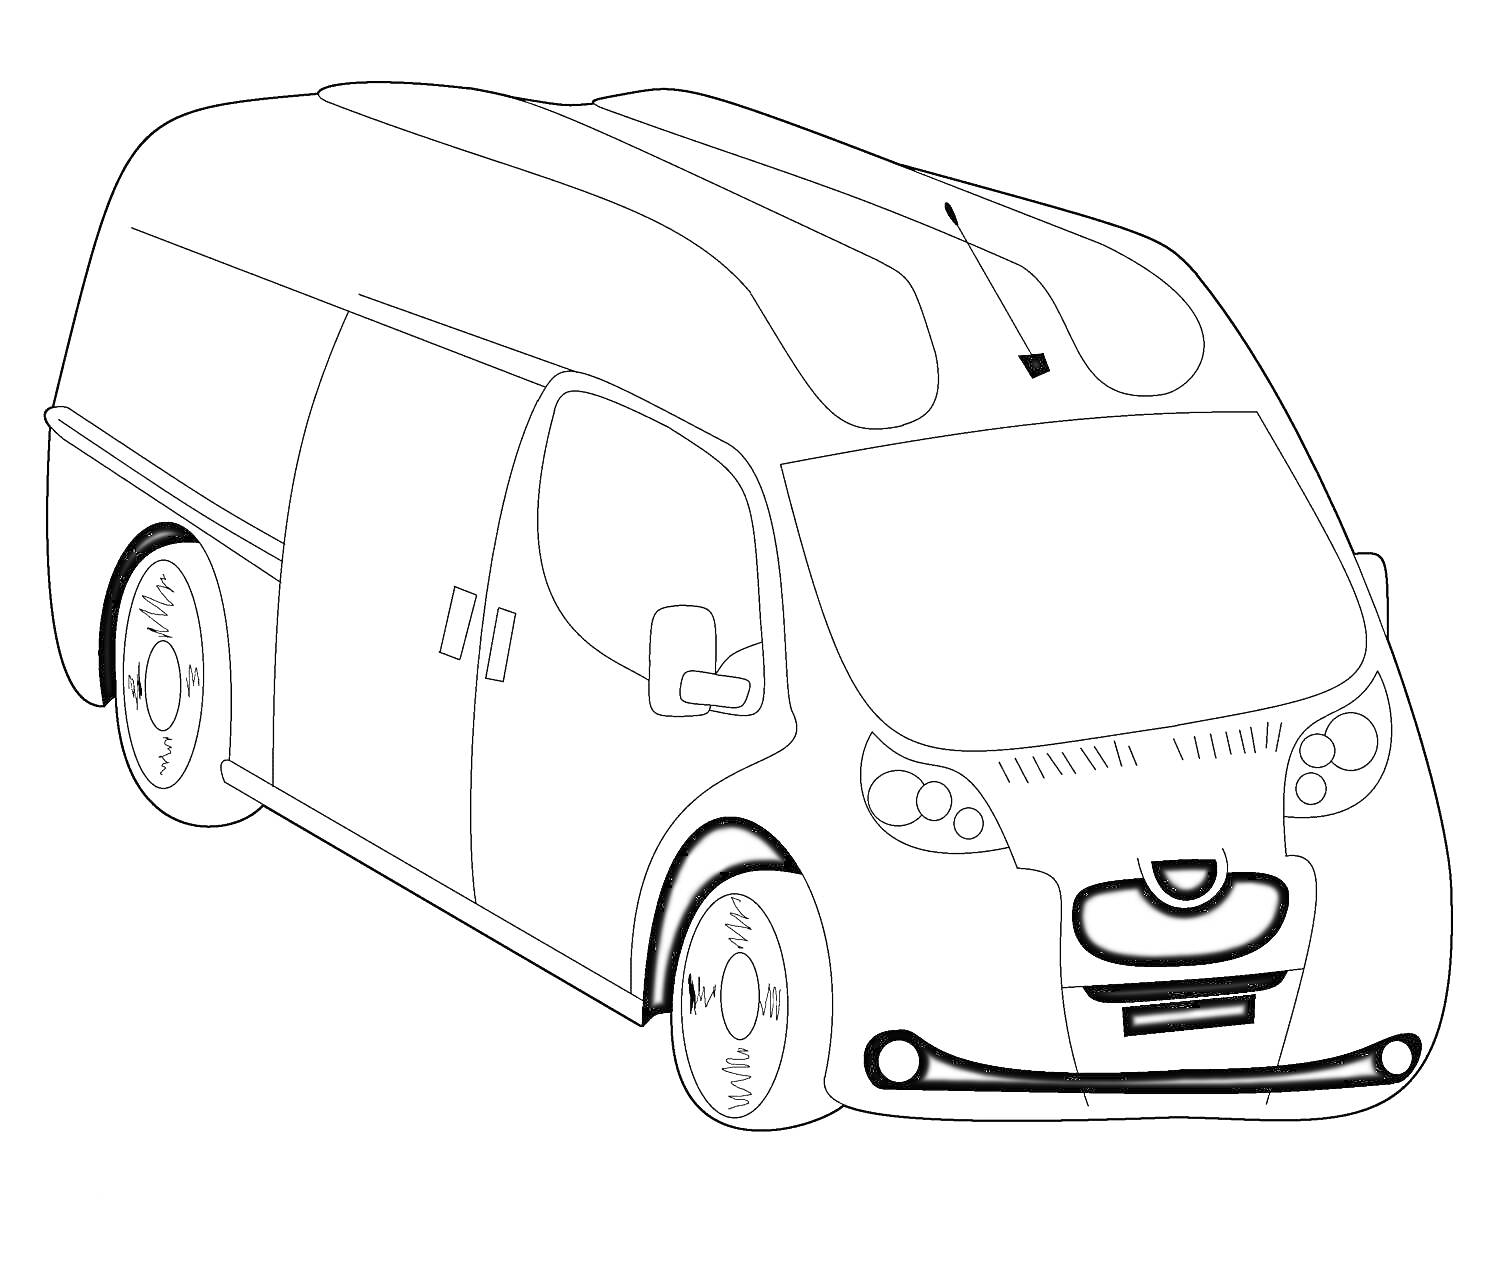 Раскраска Фургон с окнами и зеркалами, вид сбоку и спереди